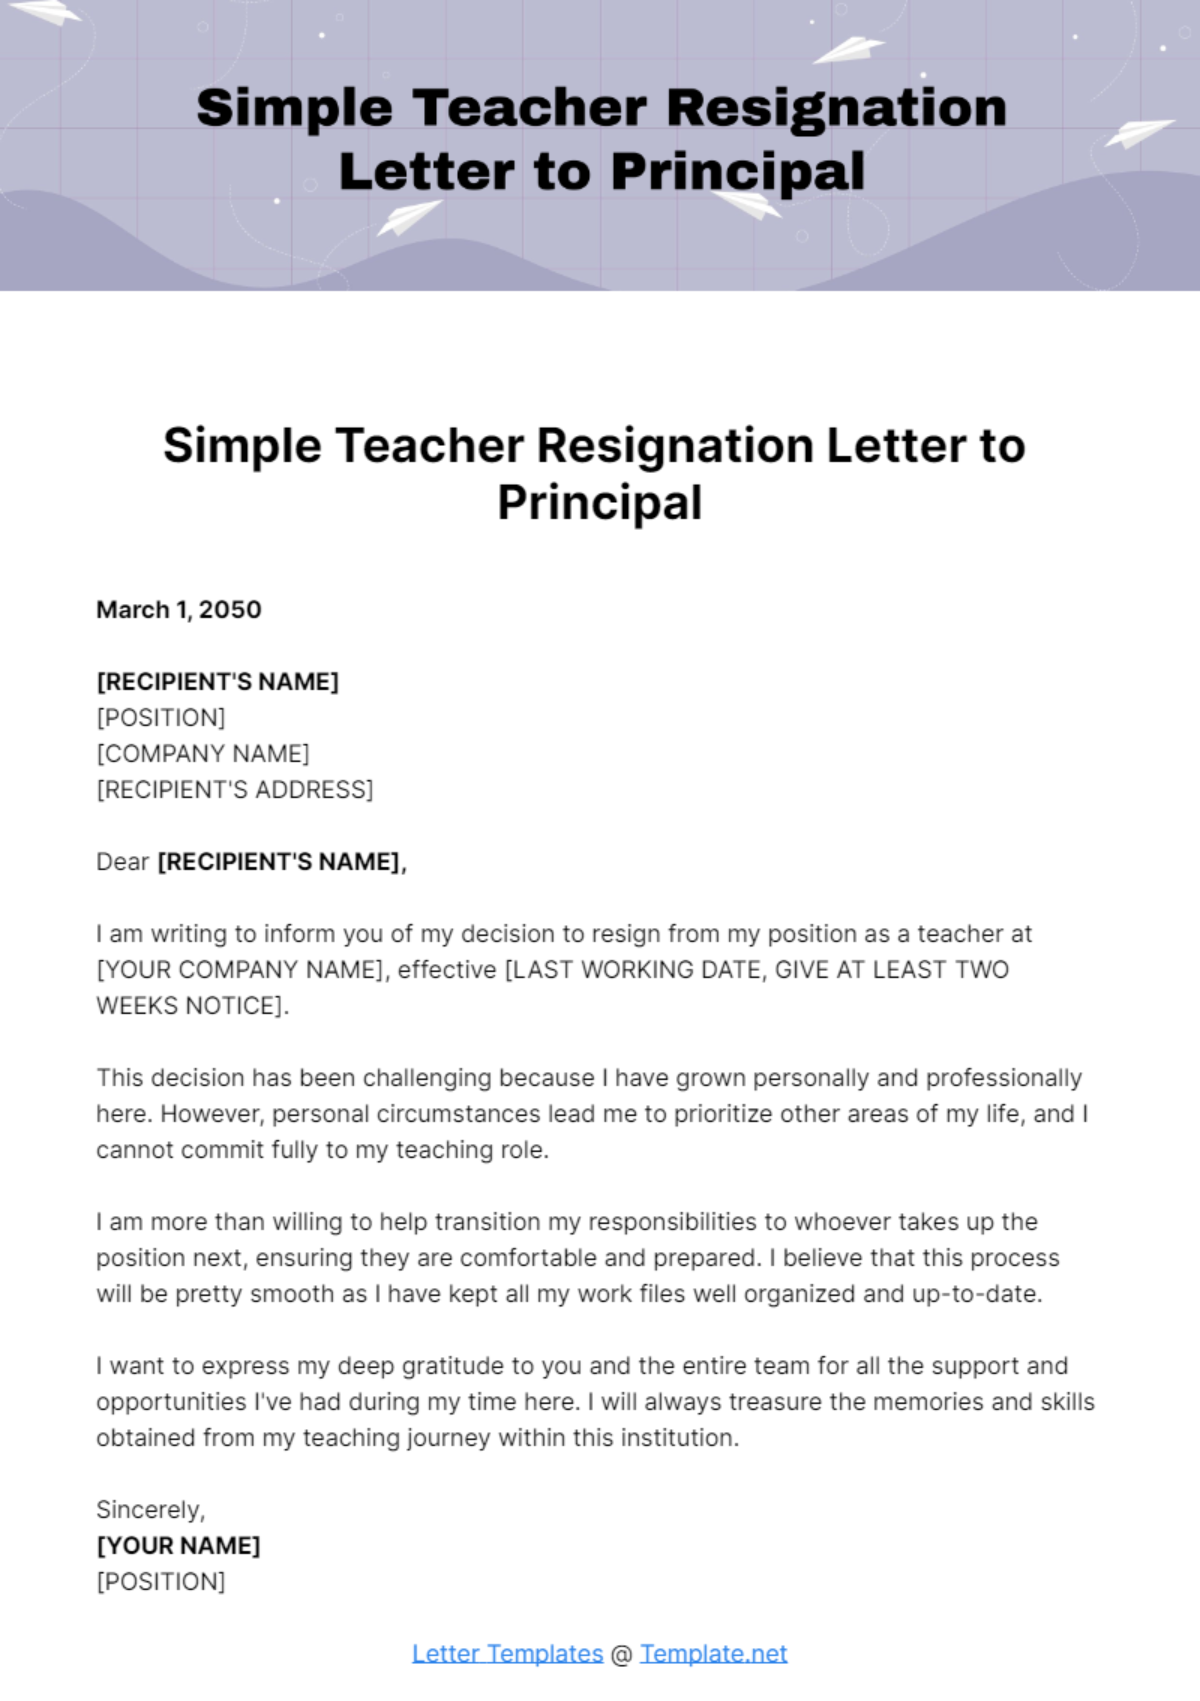 Free Simple Teacher Resignation Letter to Principal Template